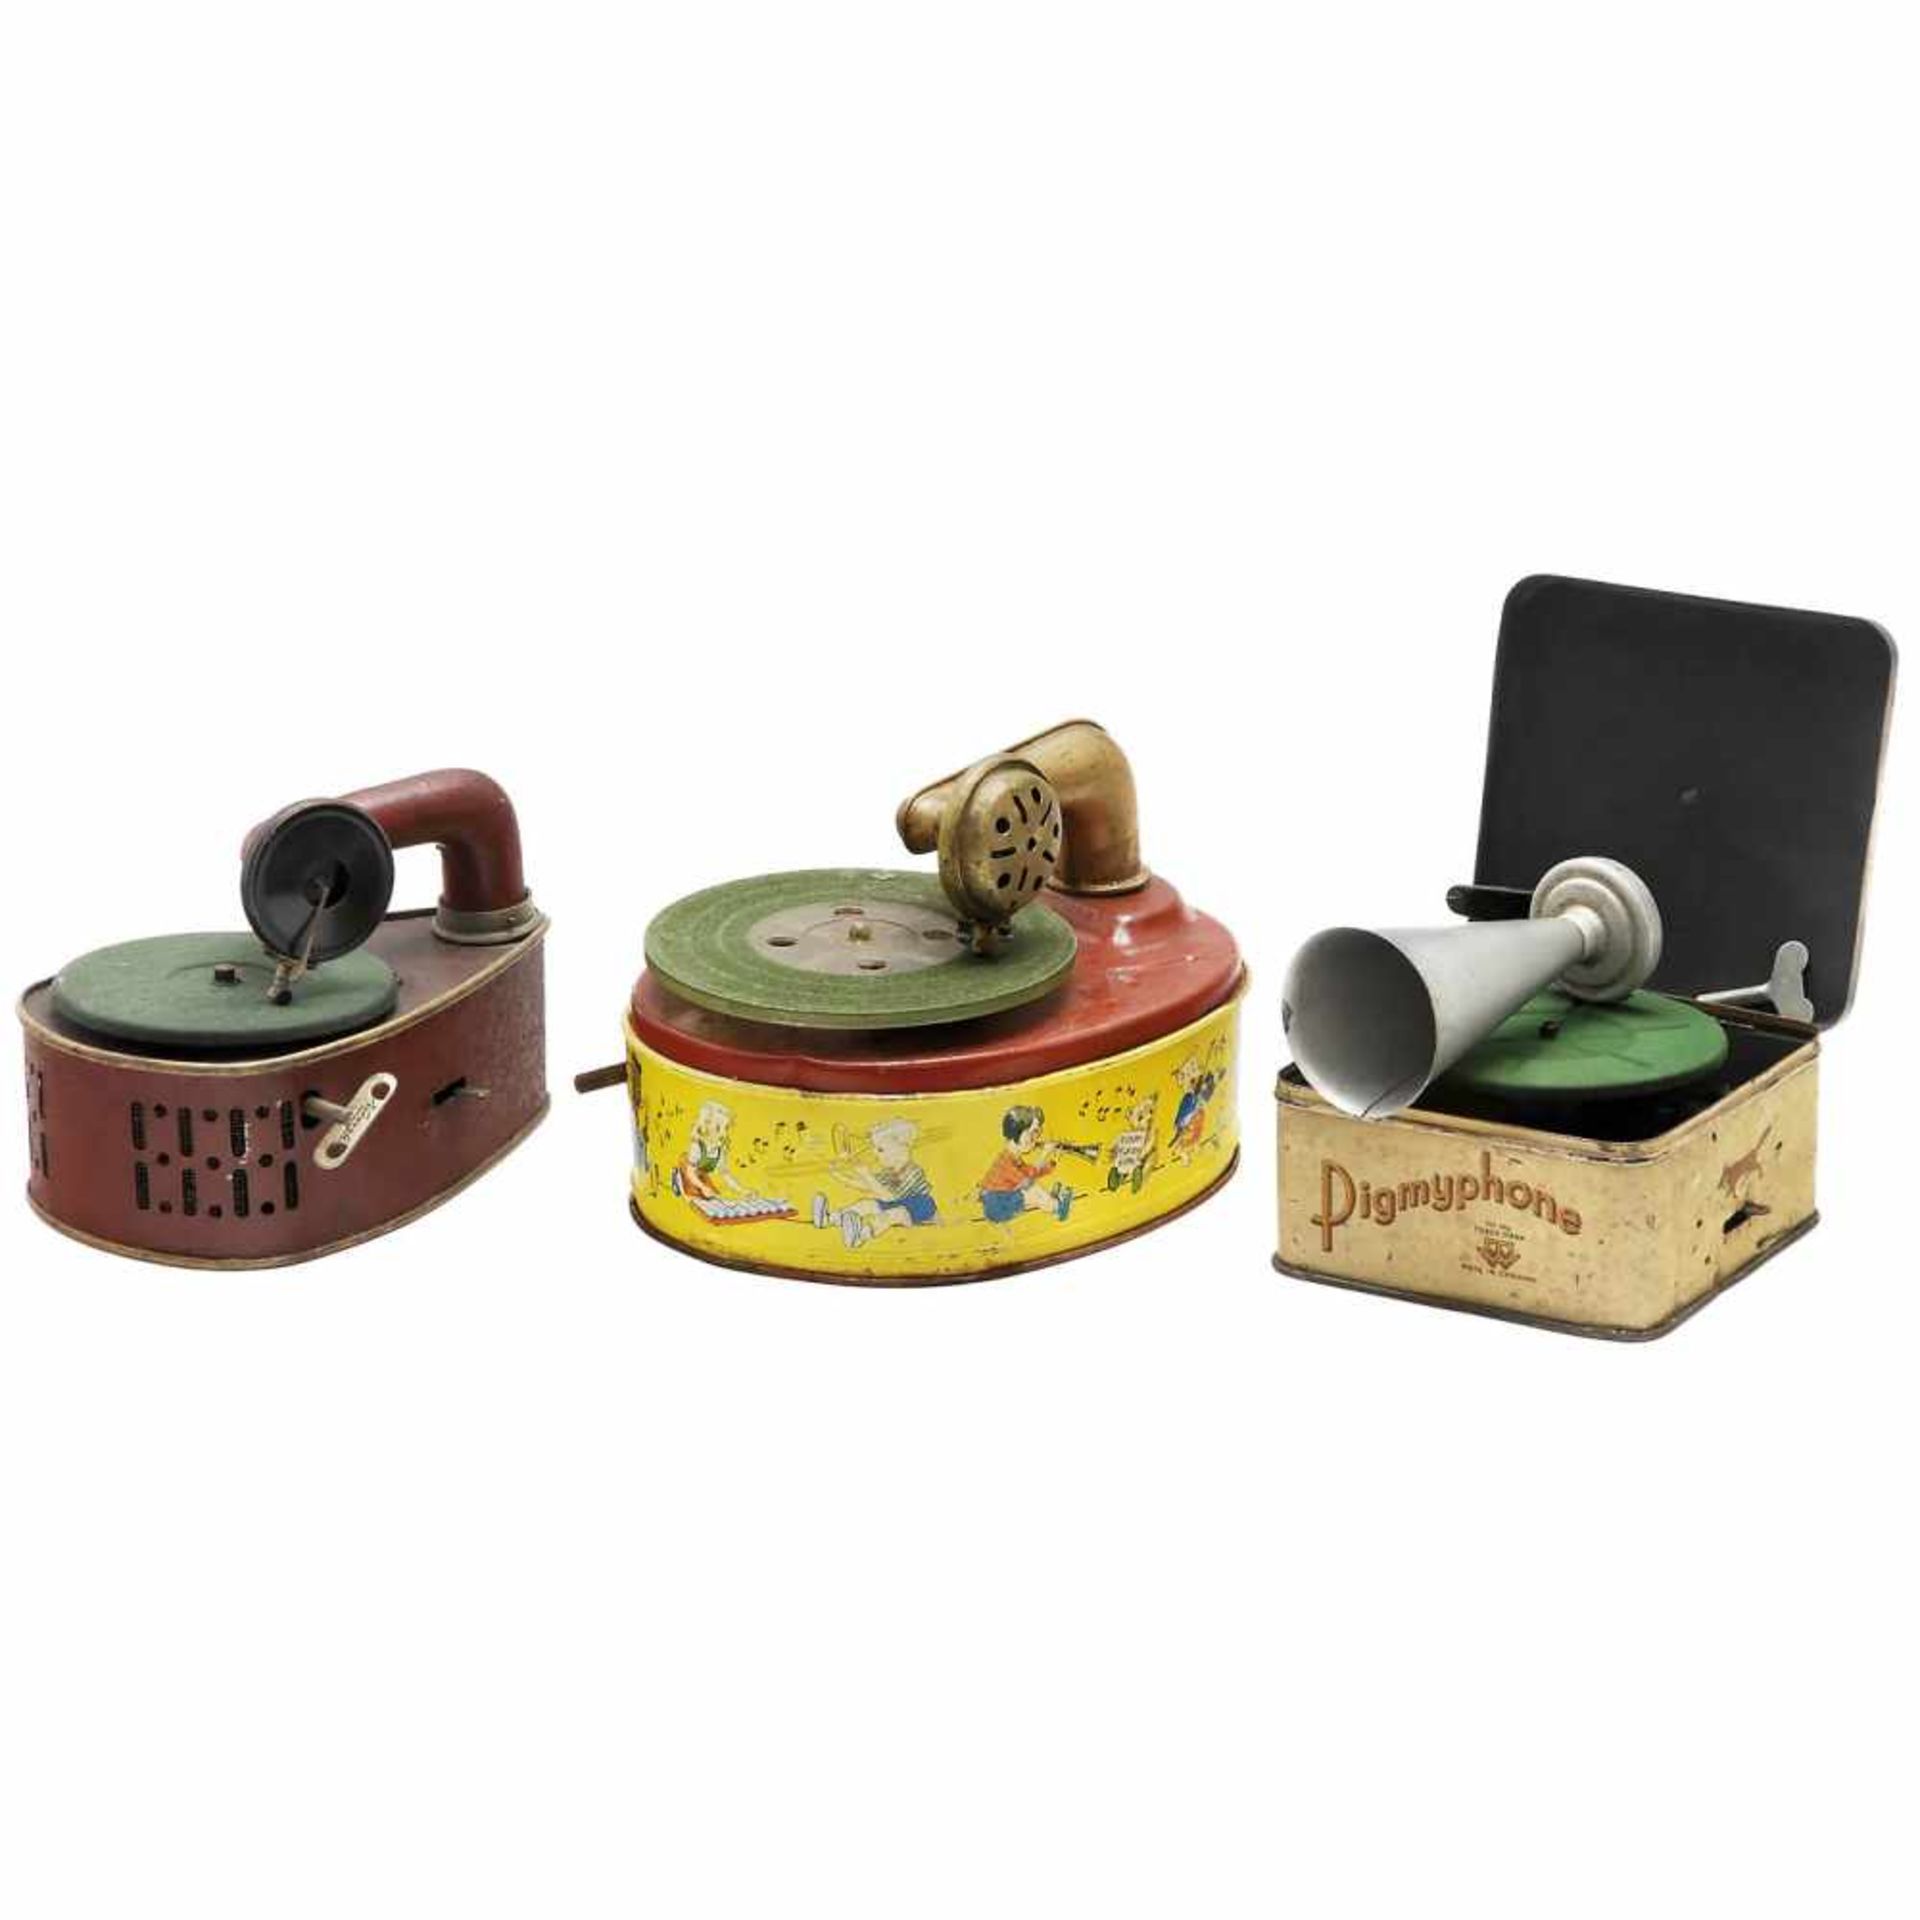 3 Toy Gramophones, c. 1930-501) Pigmyphone, Bing Werke, Nuremberg. Lithographed tin, spring-